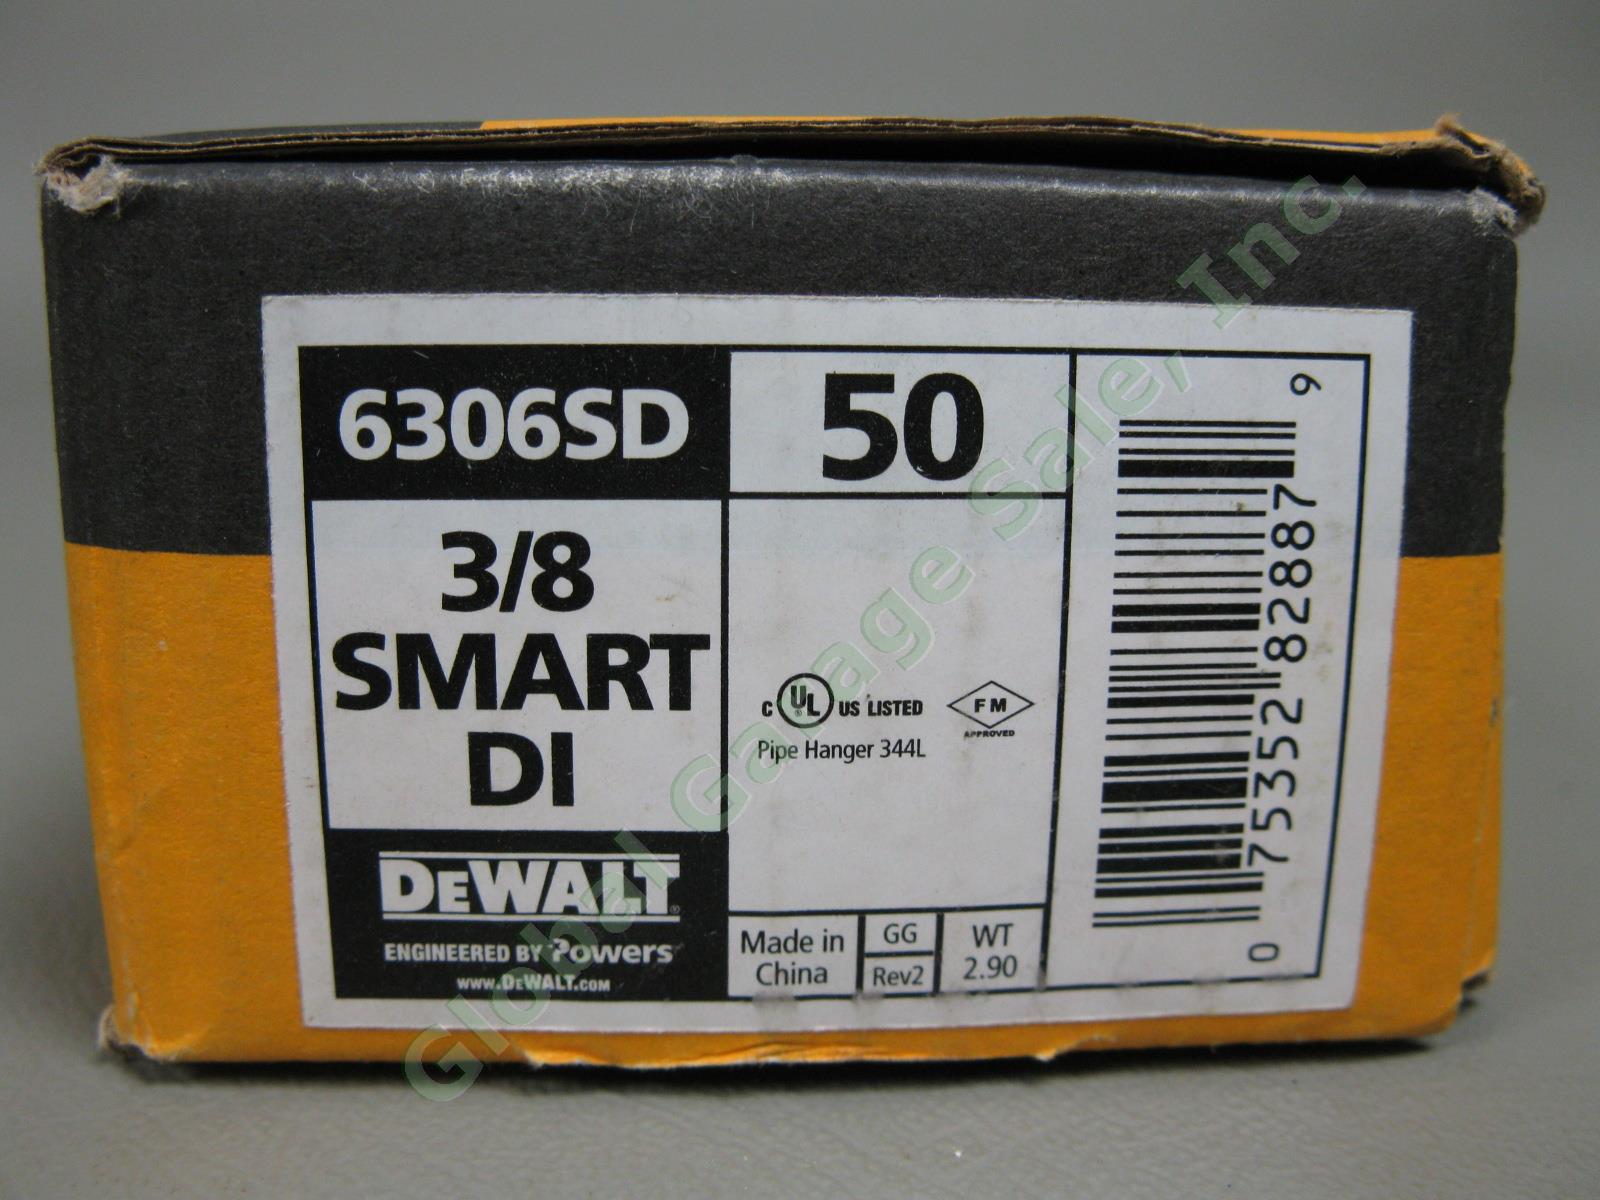 LOT of 150 NEW DeWalt Smart DI Drop in Anchor 100 3/8" 6306SD 50 1/2" 6306SD NR 10